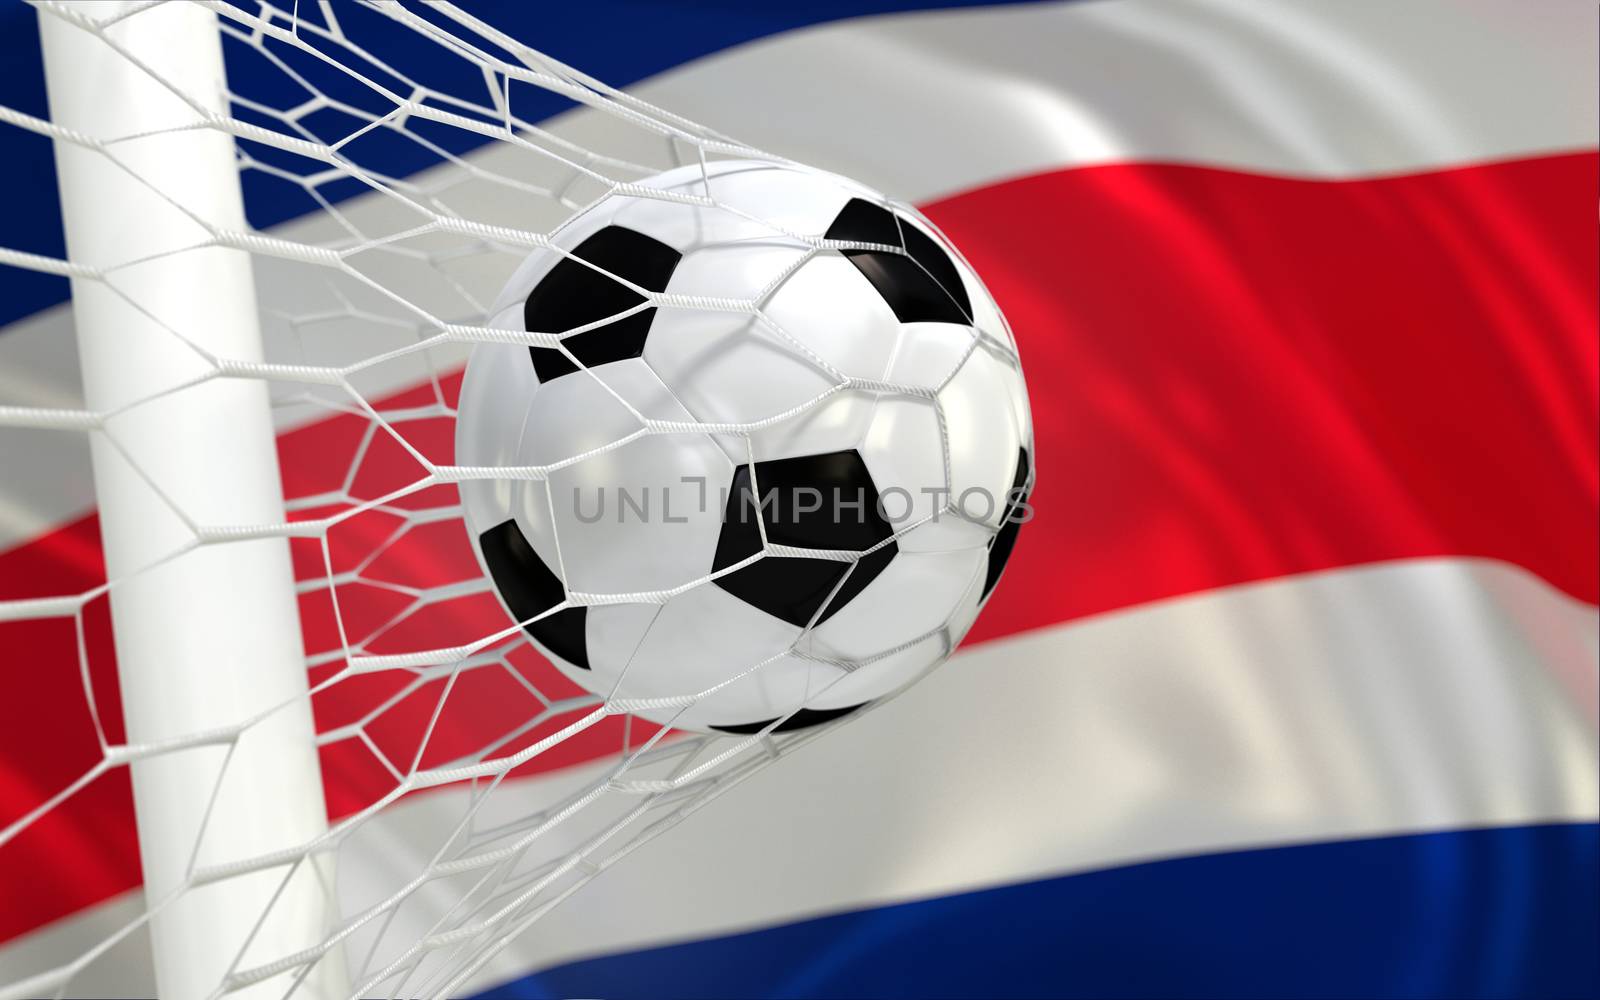 Costa Rica waving flag and soccer ball in goal net by Barbraford